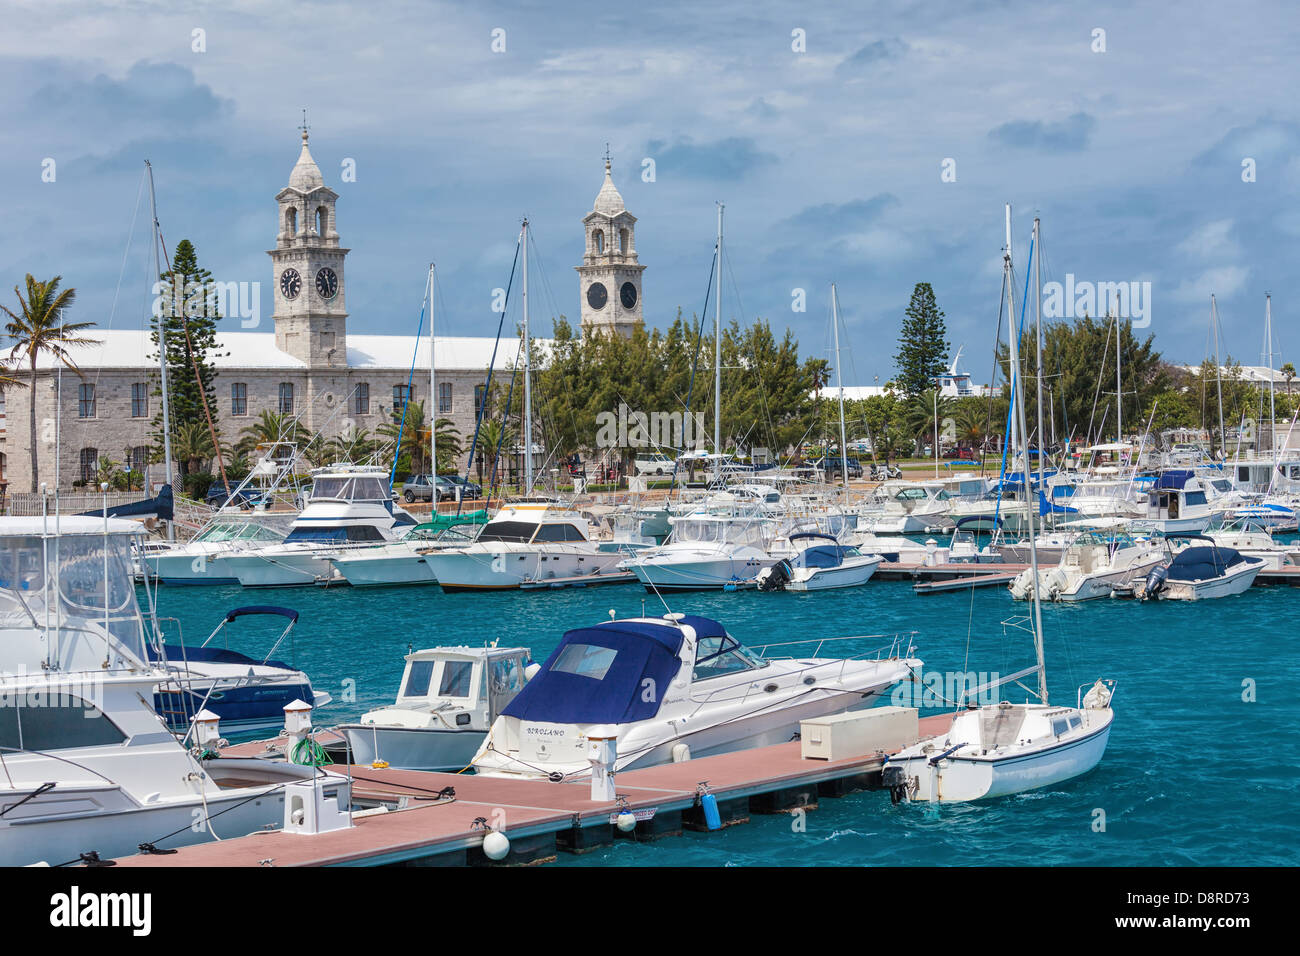 The Clocktower building and the marina at the Royal Naval Dockyard, Bermuda. Stock Photo